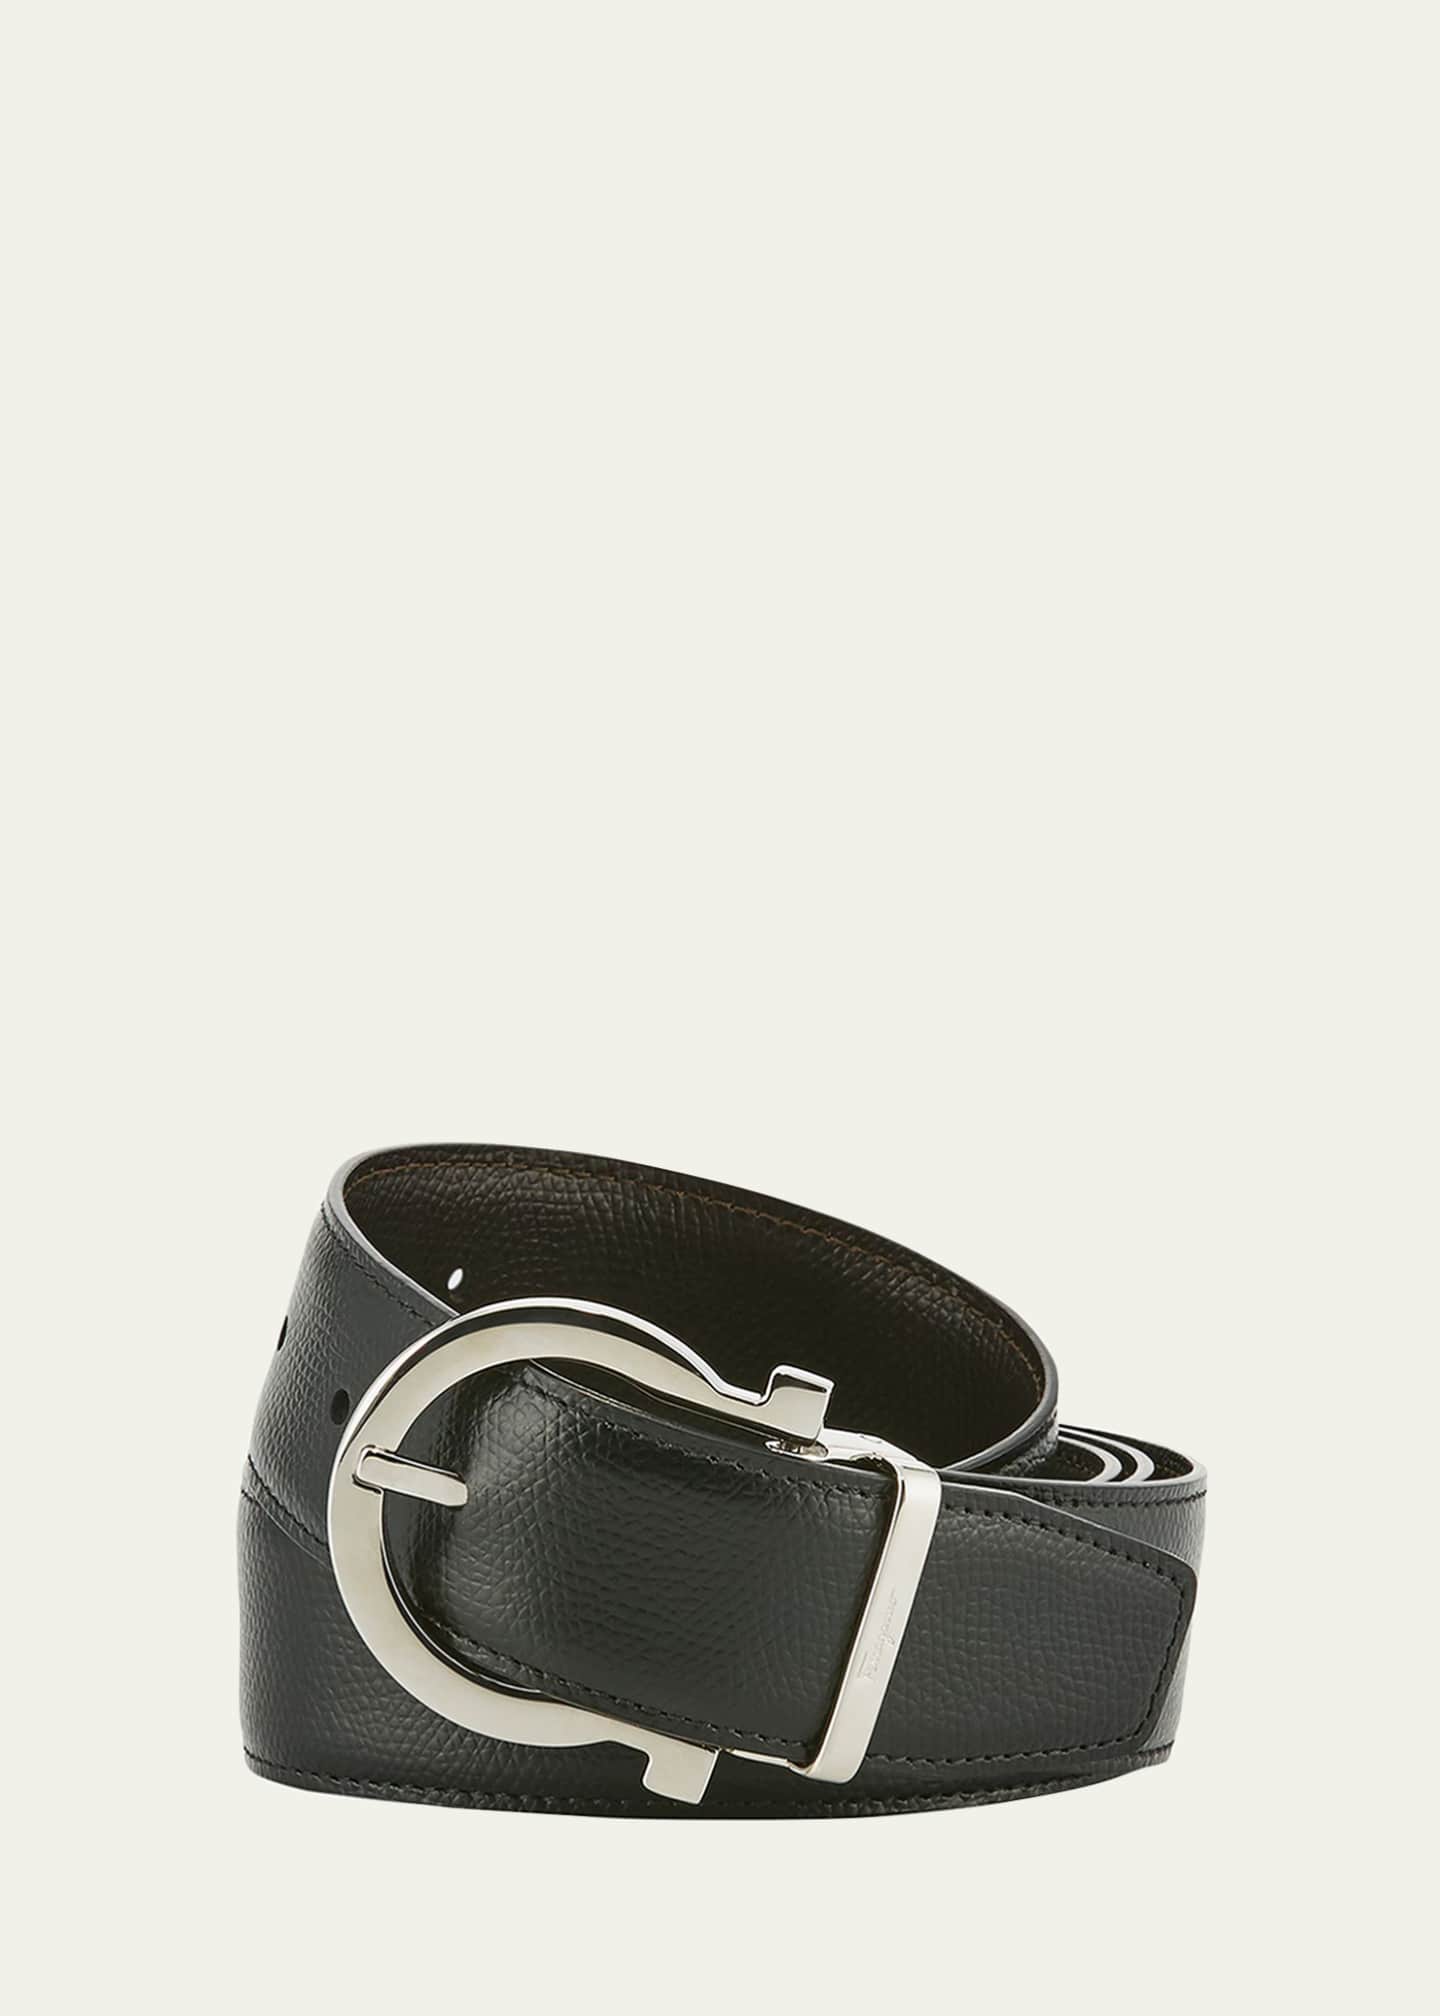 Salvatore Ferragamo Men's Reversible Leather Belt - 34 / Black/Brown